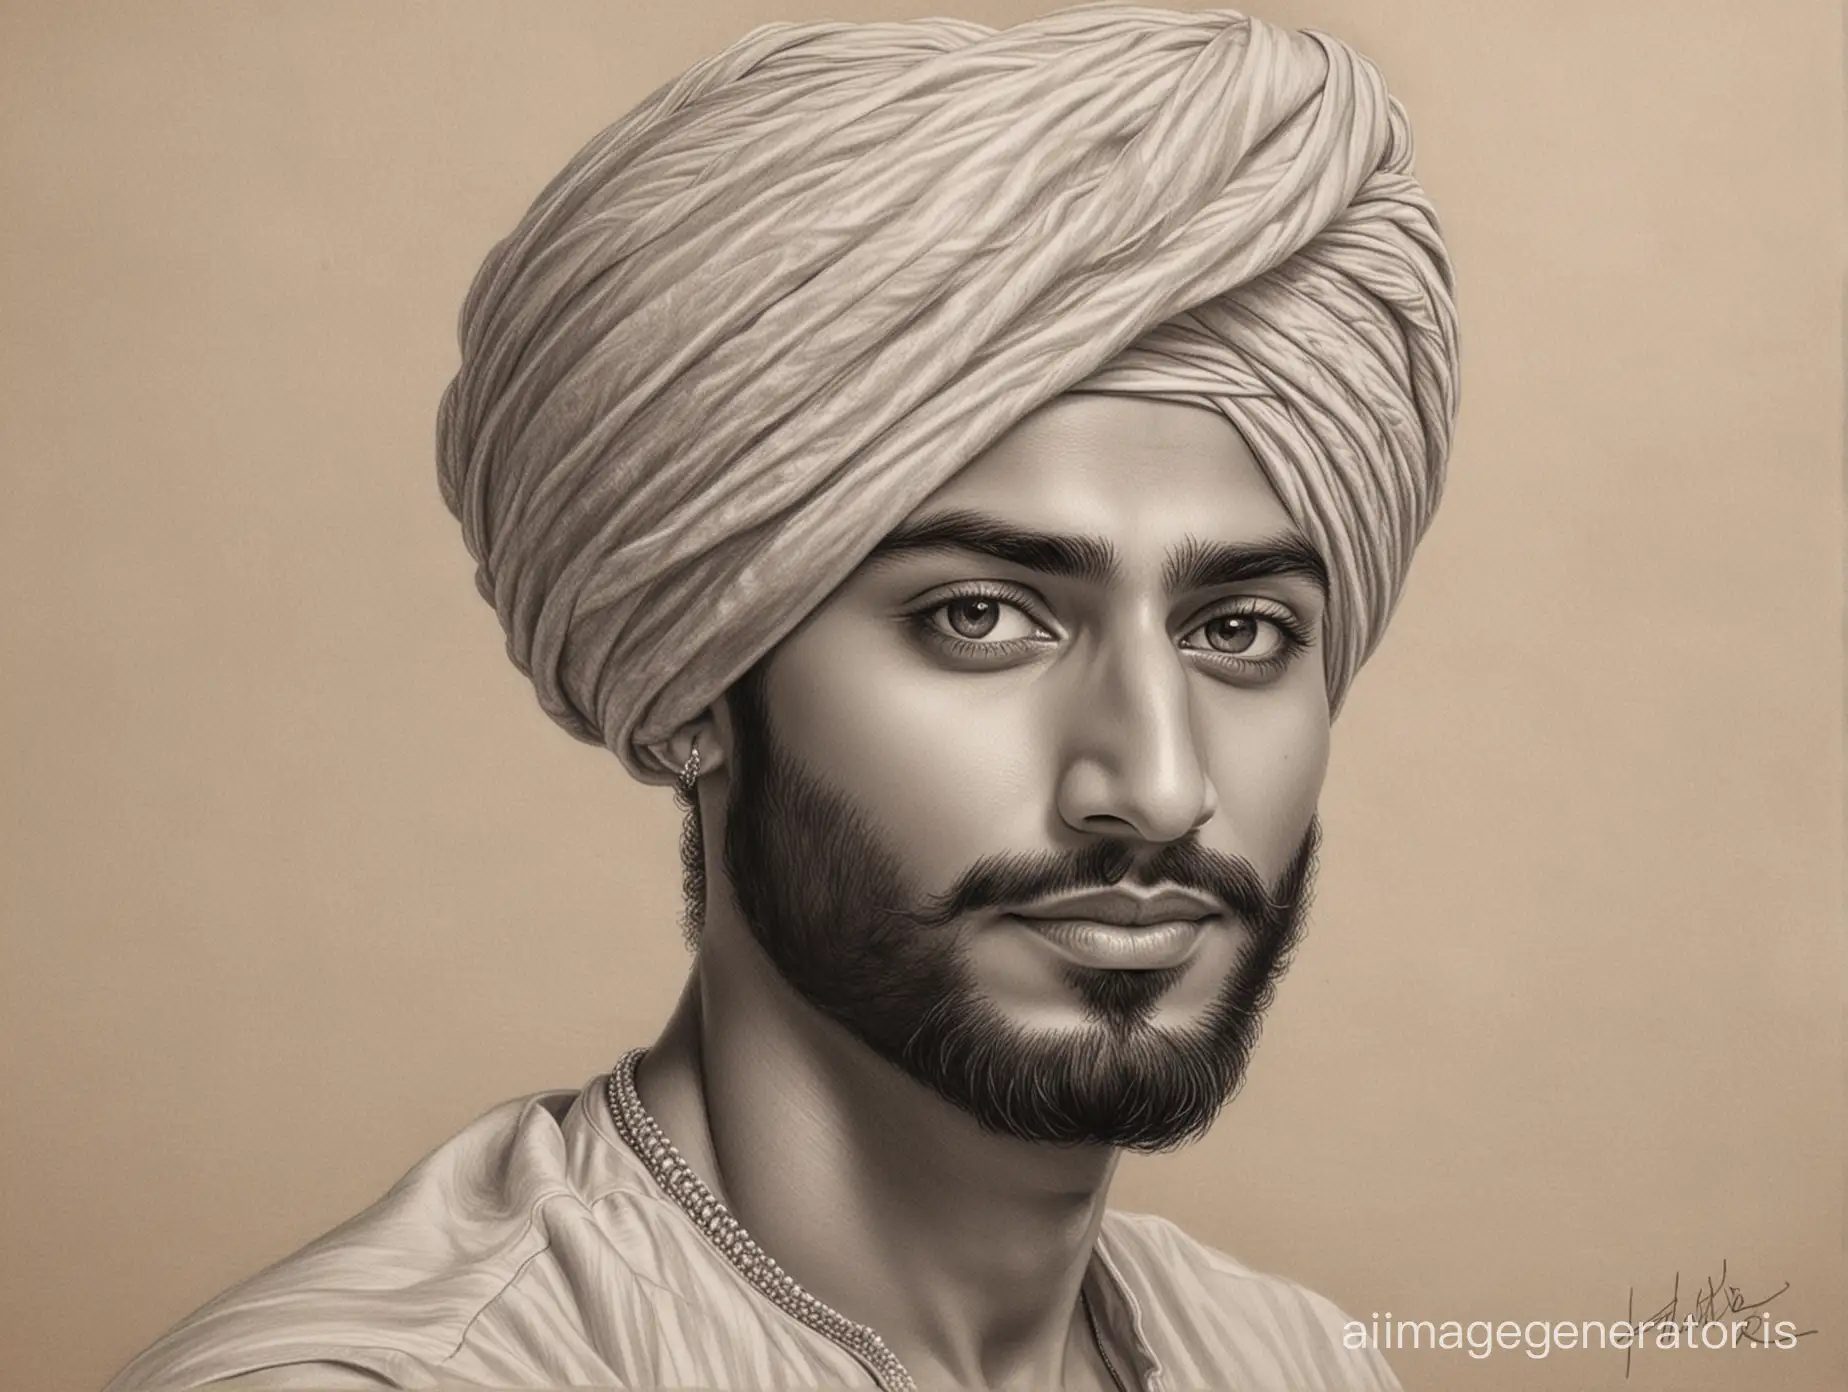 Detailed-Pencil-Sketch-of-a-Modern-Punjabi-Man-with-Elaborate-Turban